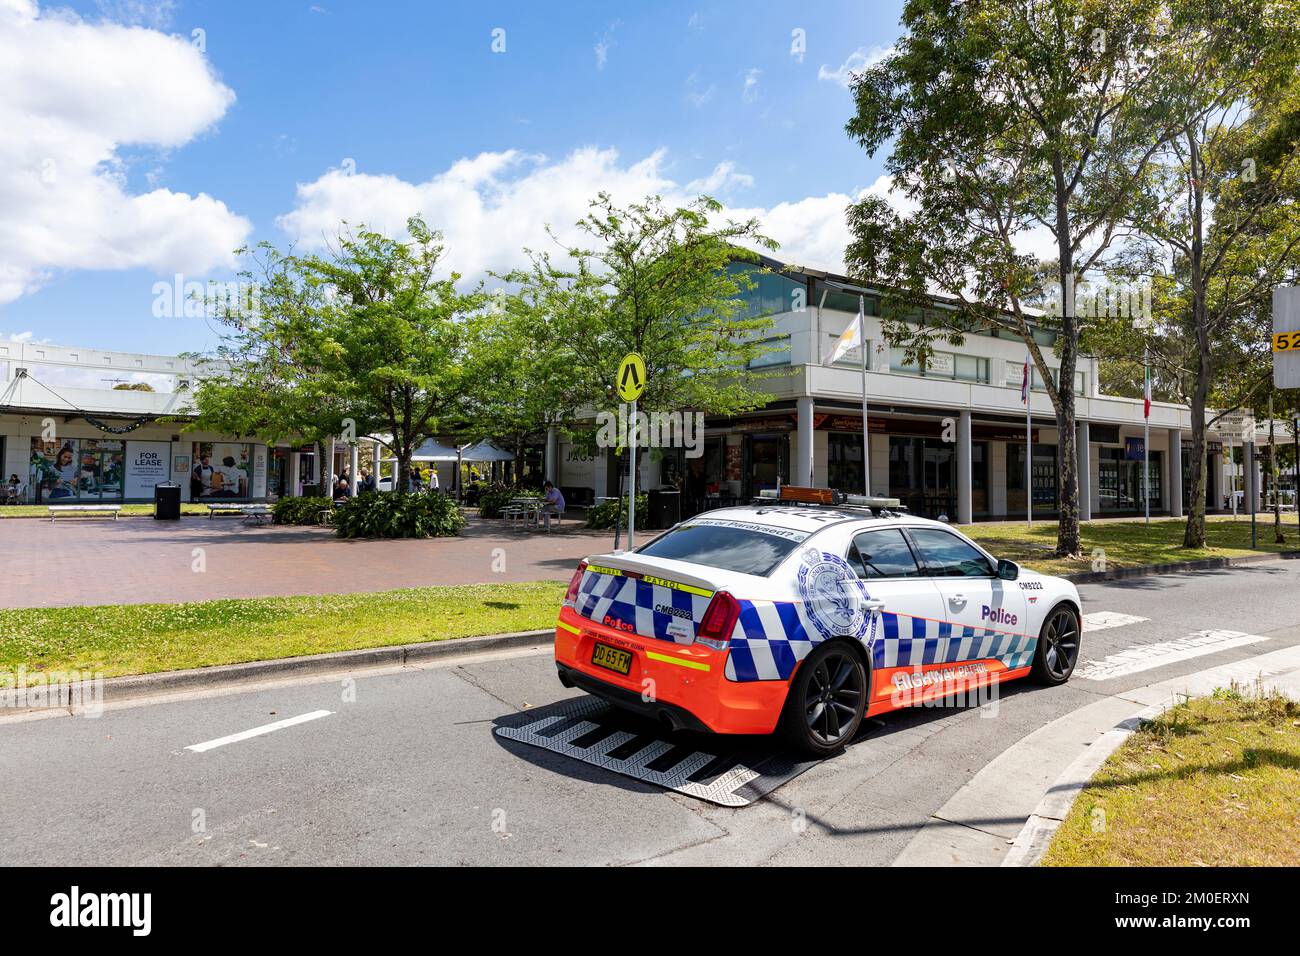 NSW Sydney police car, a chrysler highway patrol vehicle in the suburb of Newington, Sydney,Australia Stock Photo